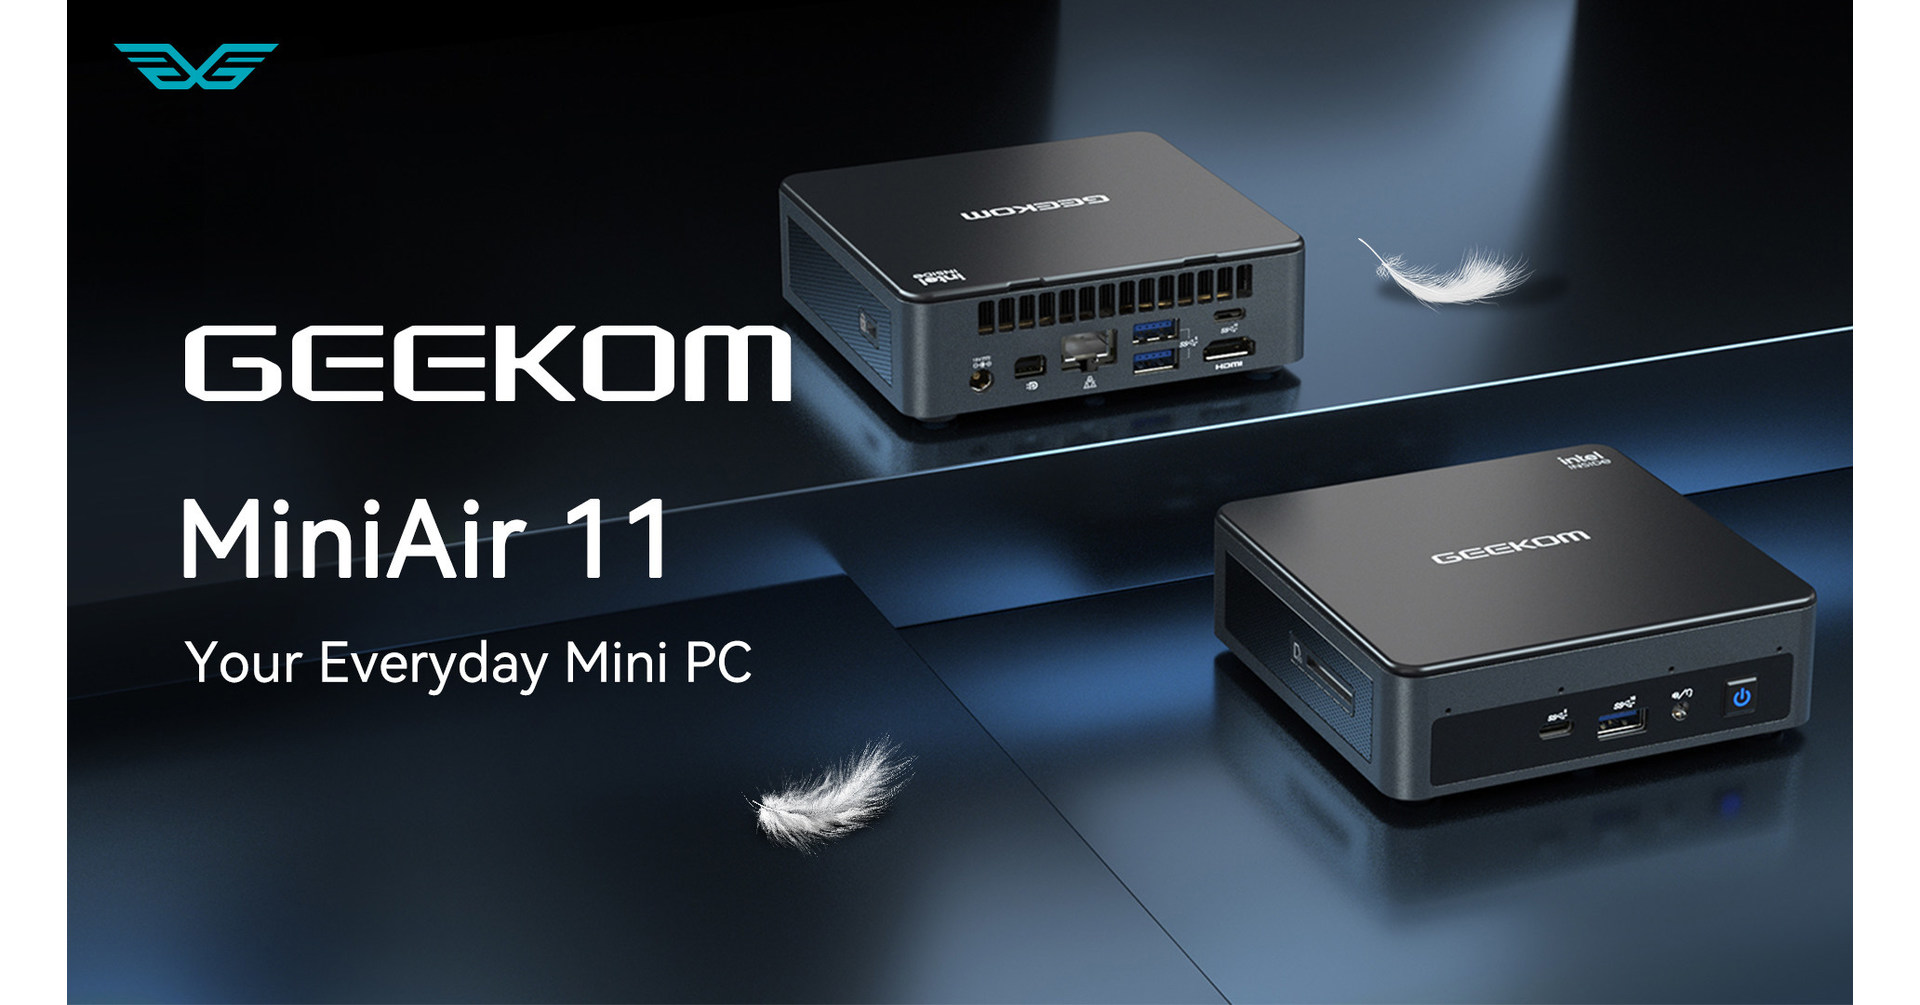 It's here, GEEKOM MiniAir 11: Your Everyday Mini PC.